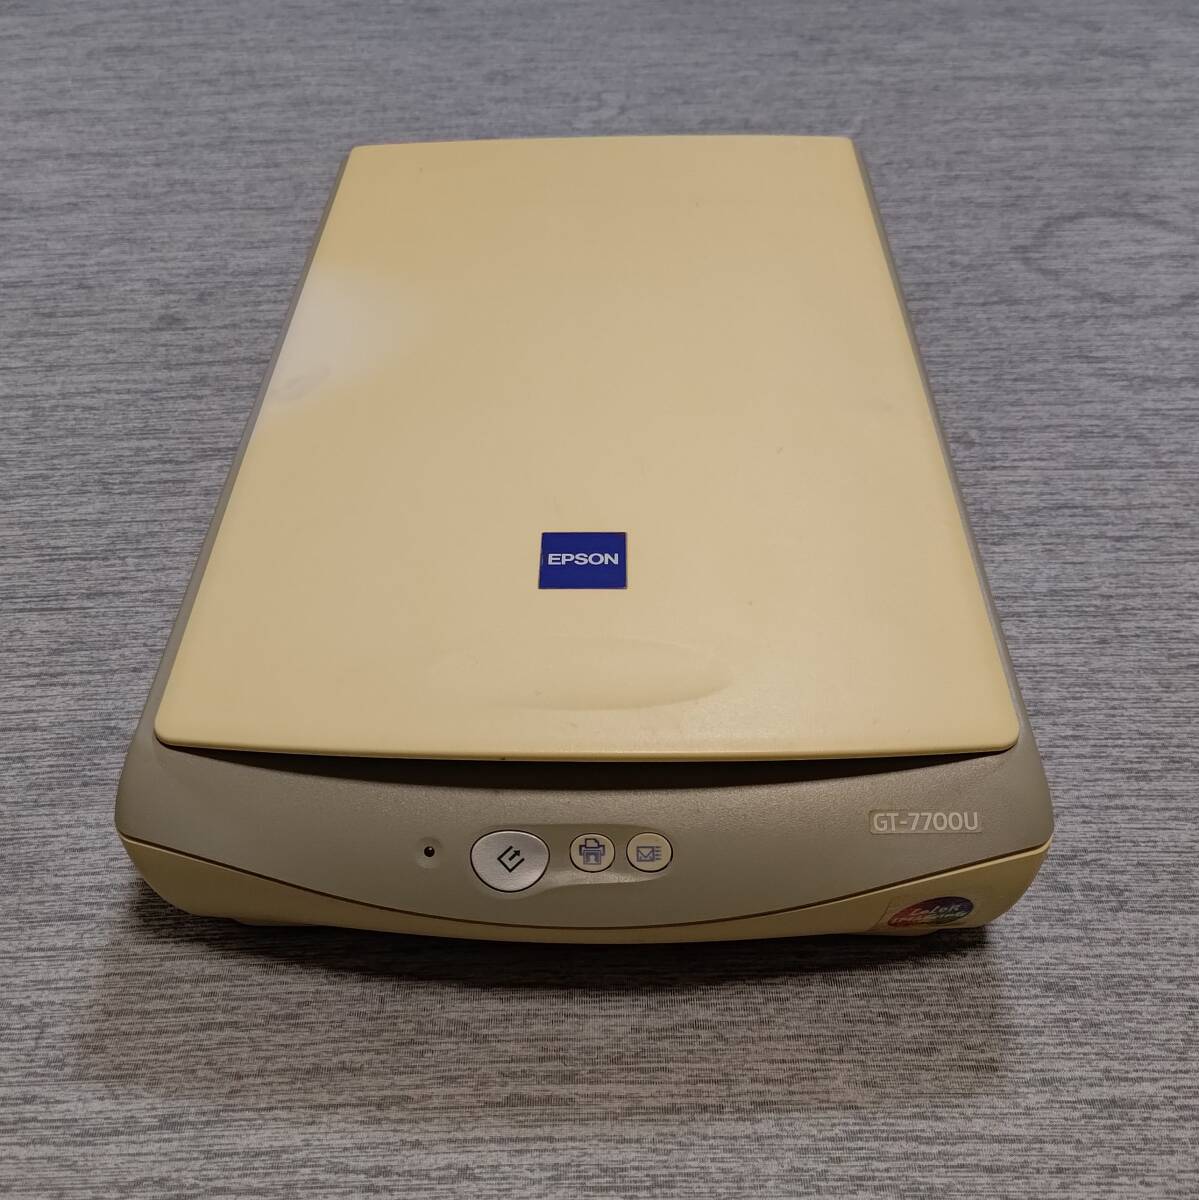 EPSON GT-7700U Epson scanner electrification has confirmed 